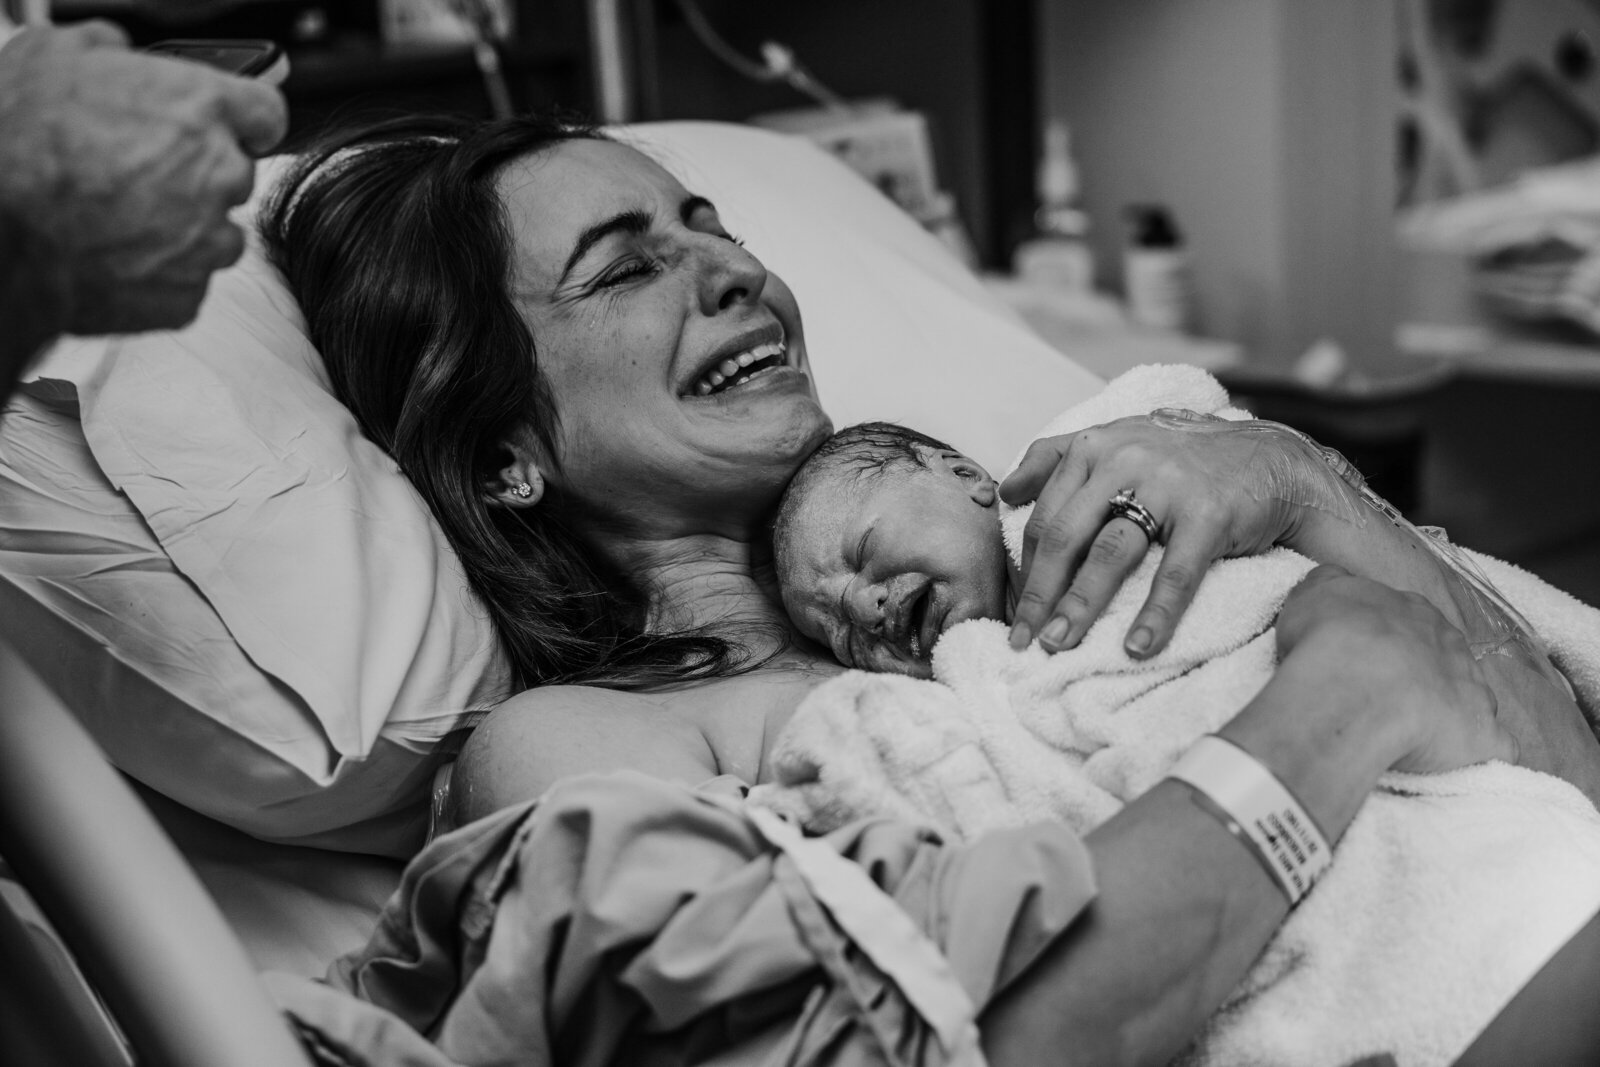 Epidural Birth at Fiona Stanley hospital, mumma holding her newborn baby